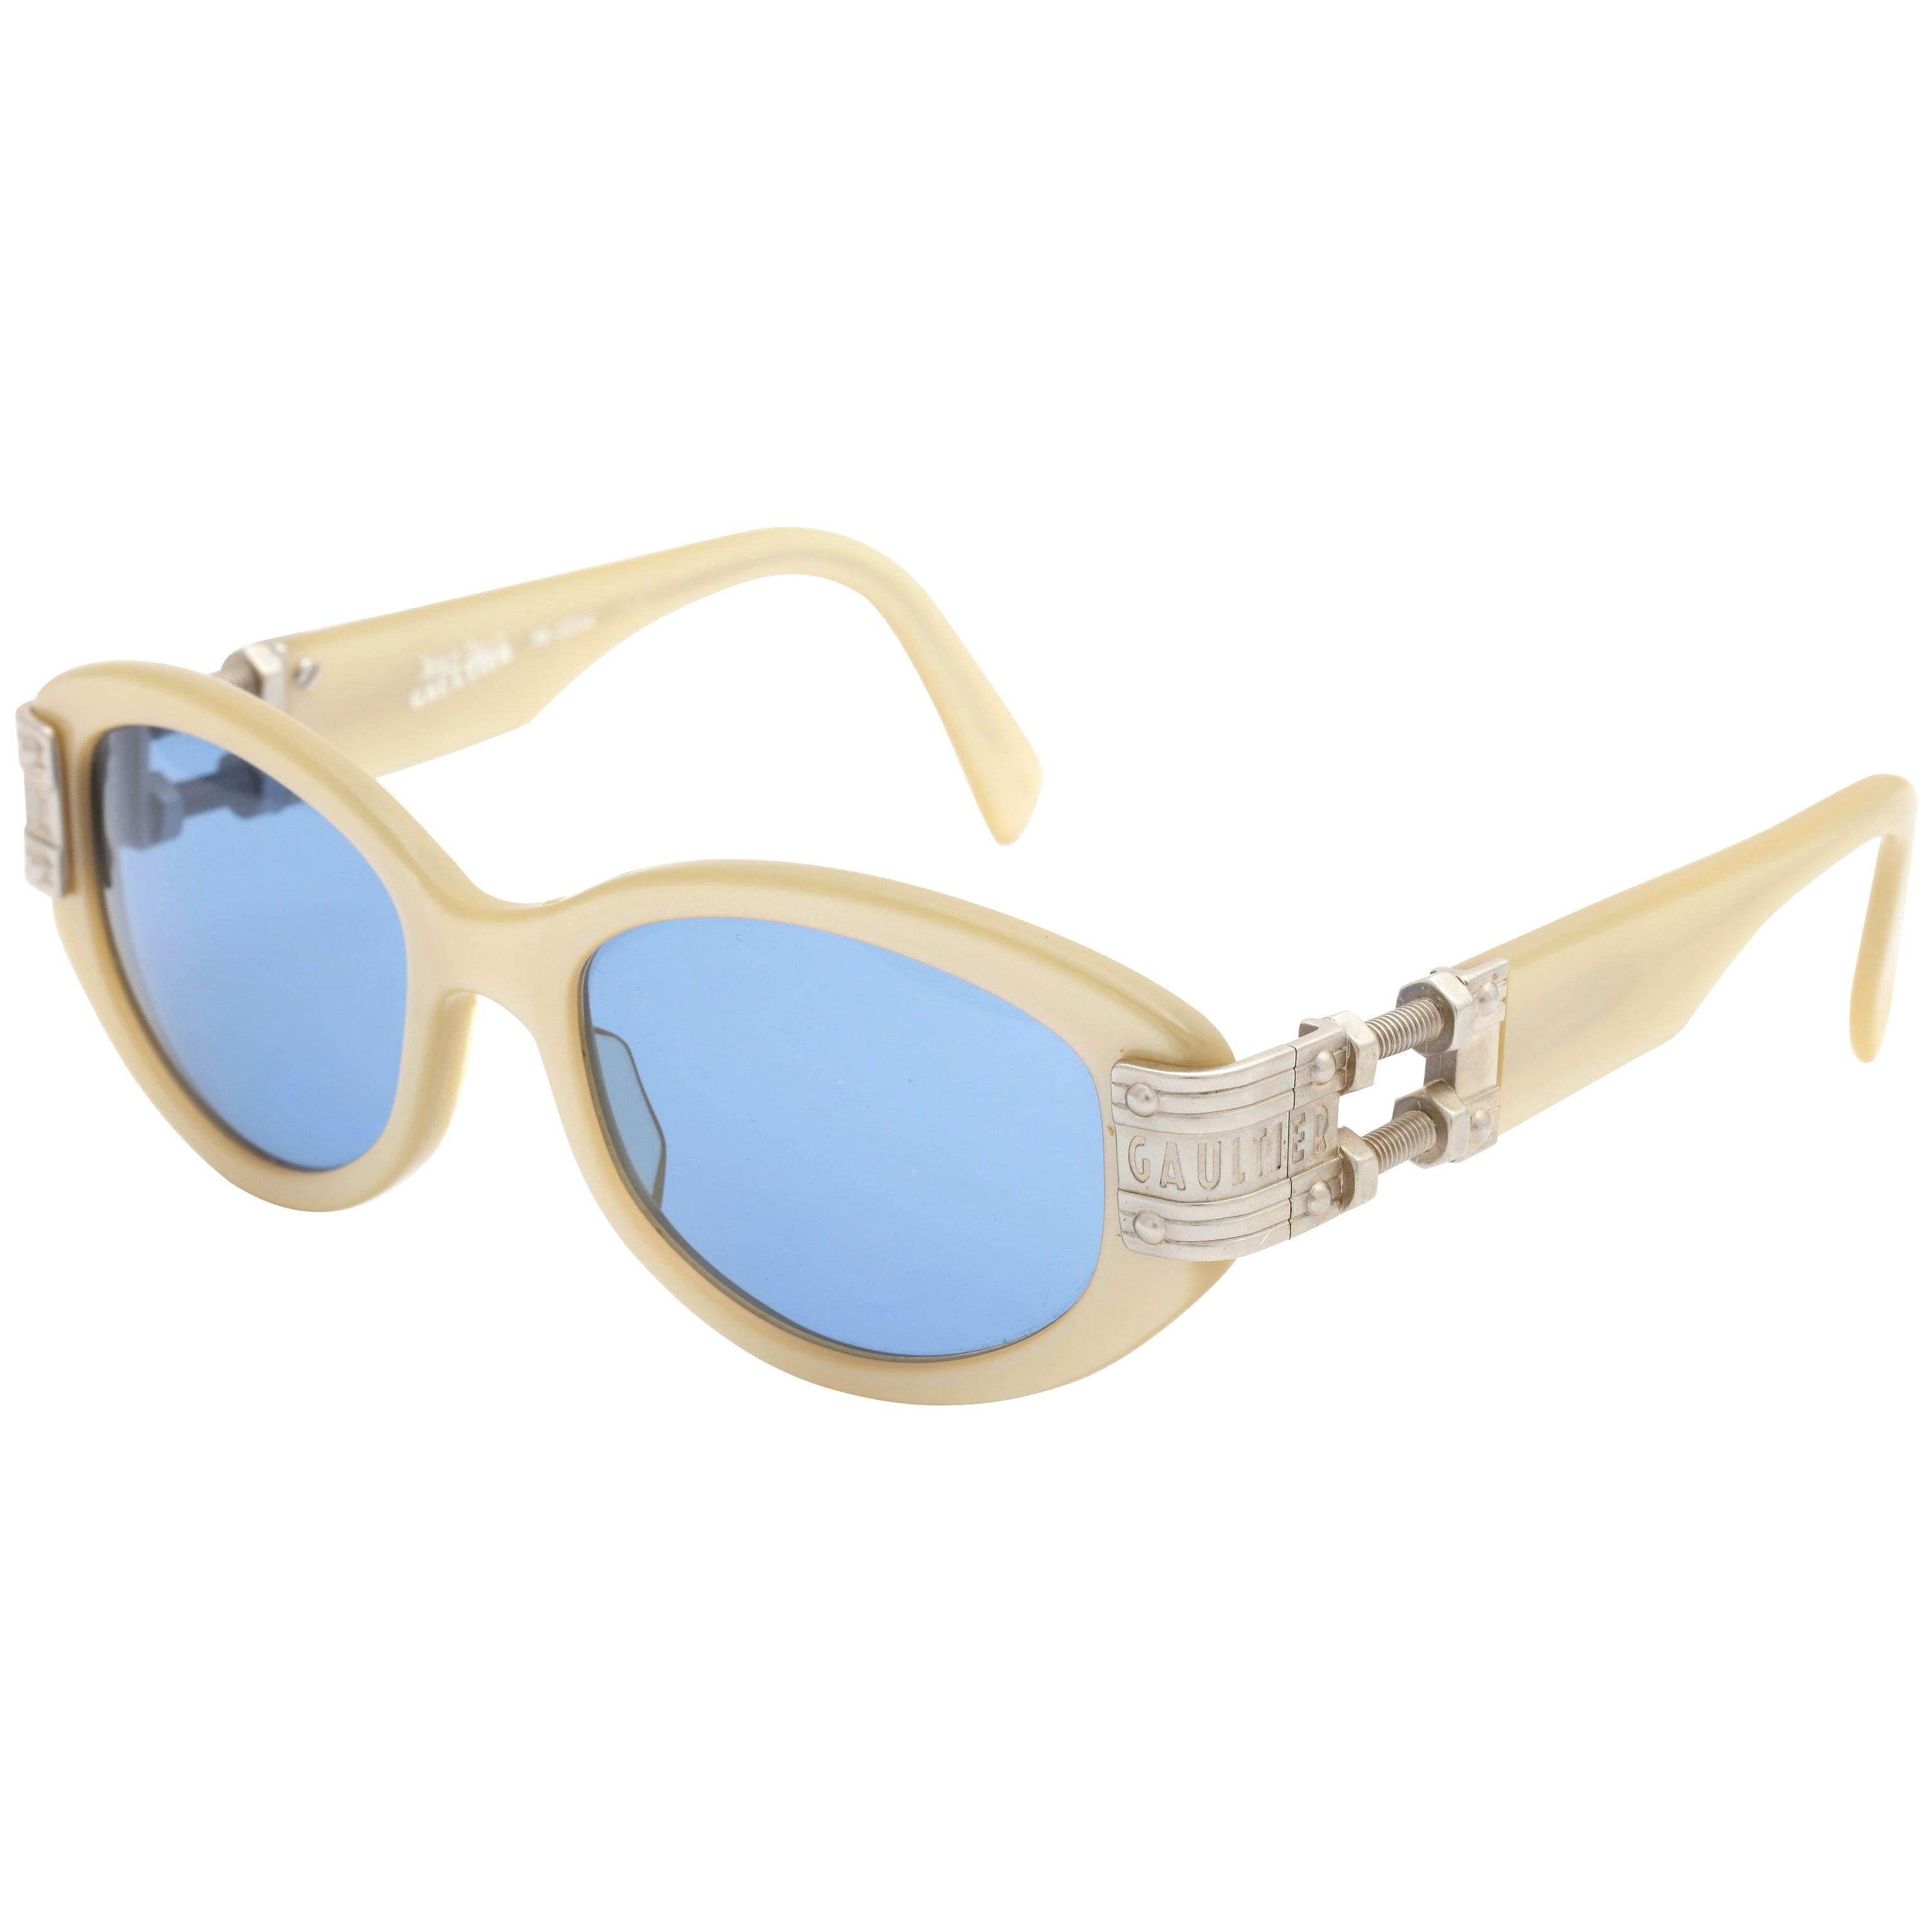 Jean Paul Gaultier Vintage 56-5204 Sunglasses For Sale